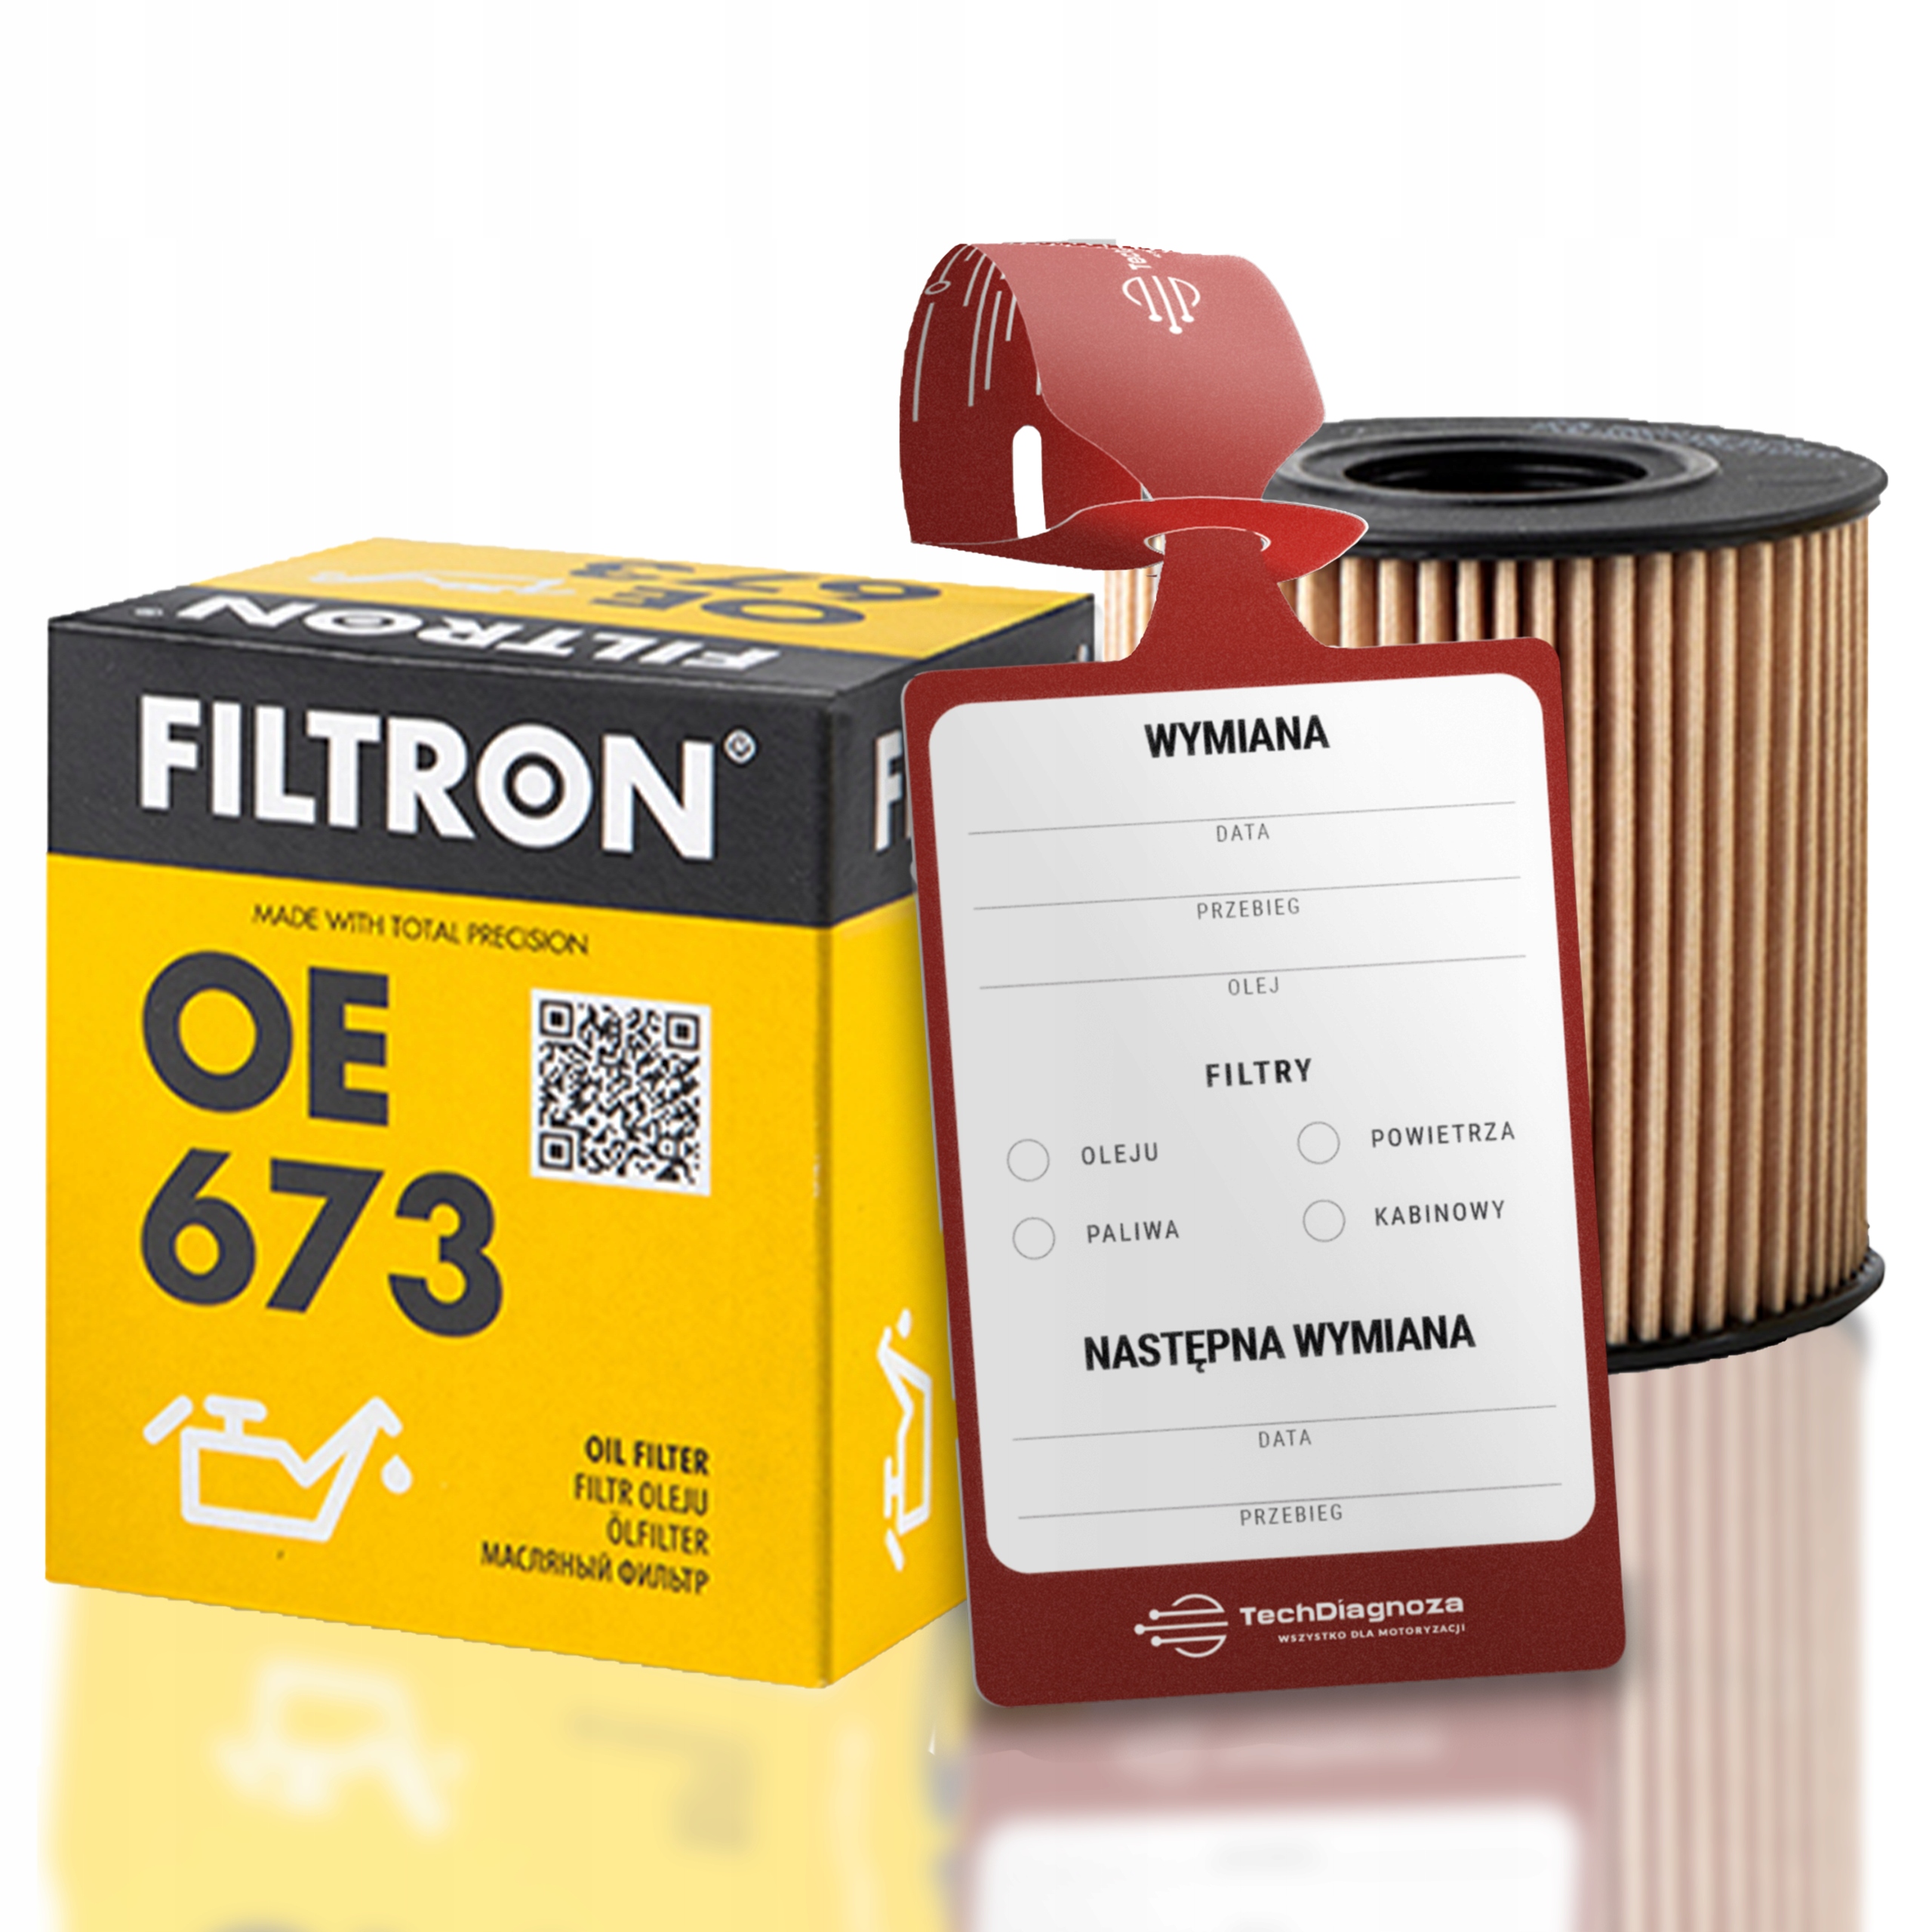 Filtron фильтр масляный oe673